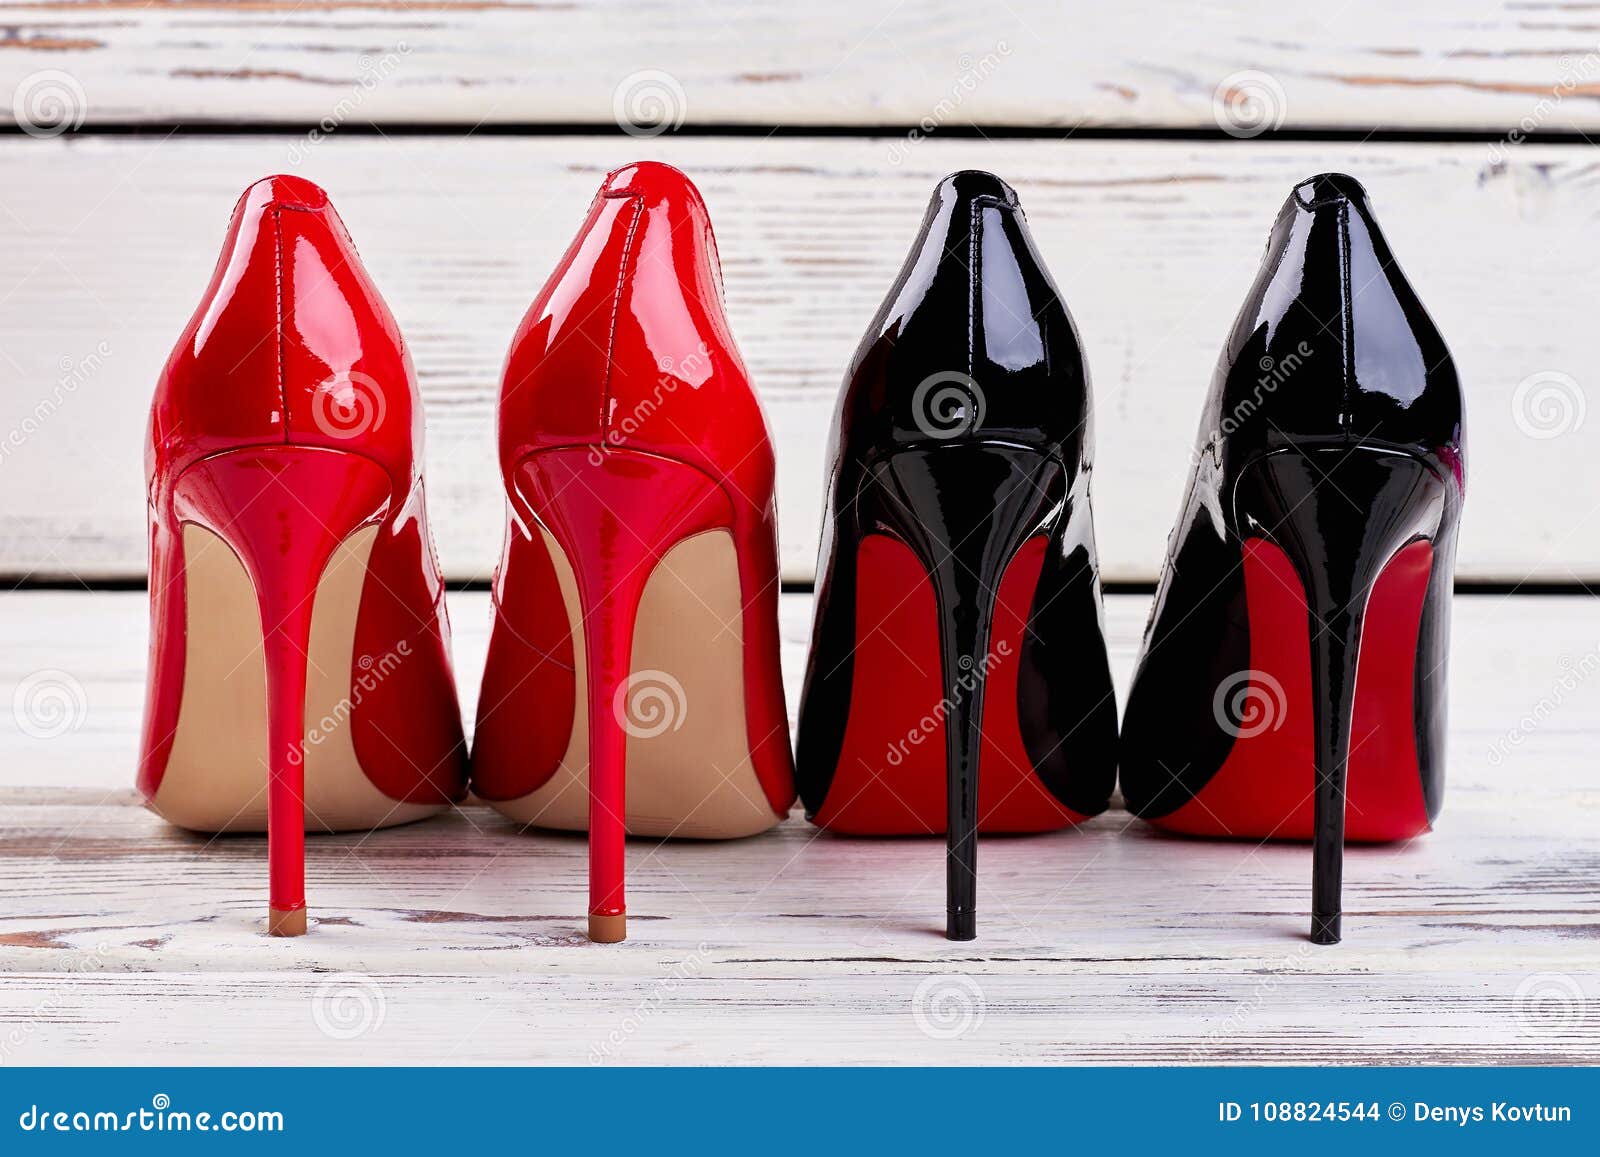 Amazon.com | ADMLZQQ Women's Classic Pumps Pointed Toe High Heel 3.34  inch/8.5cm Stiletto Heels Party Wedding Dress Office Shoes,Black,6 | Pumps